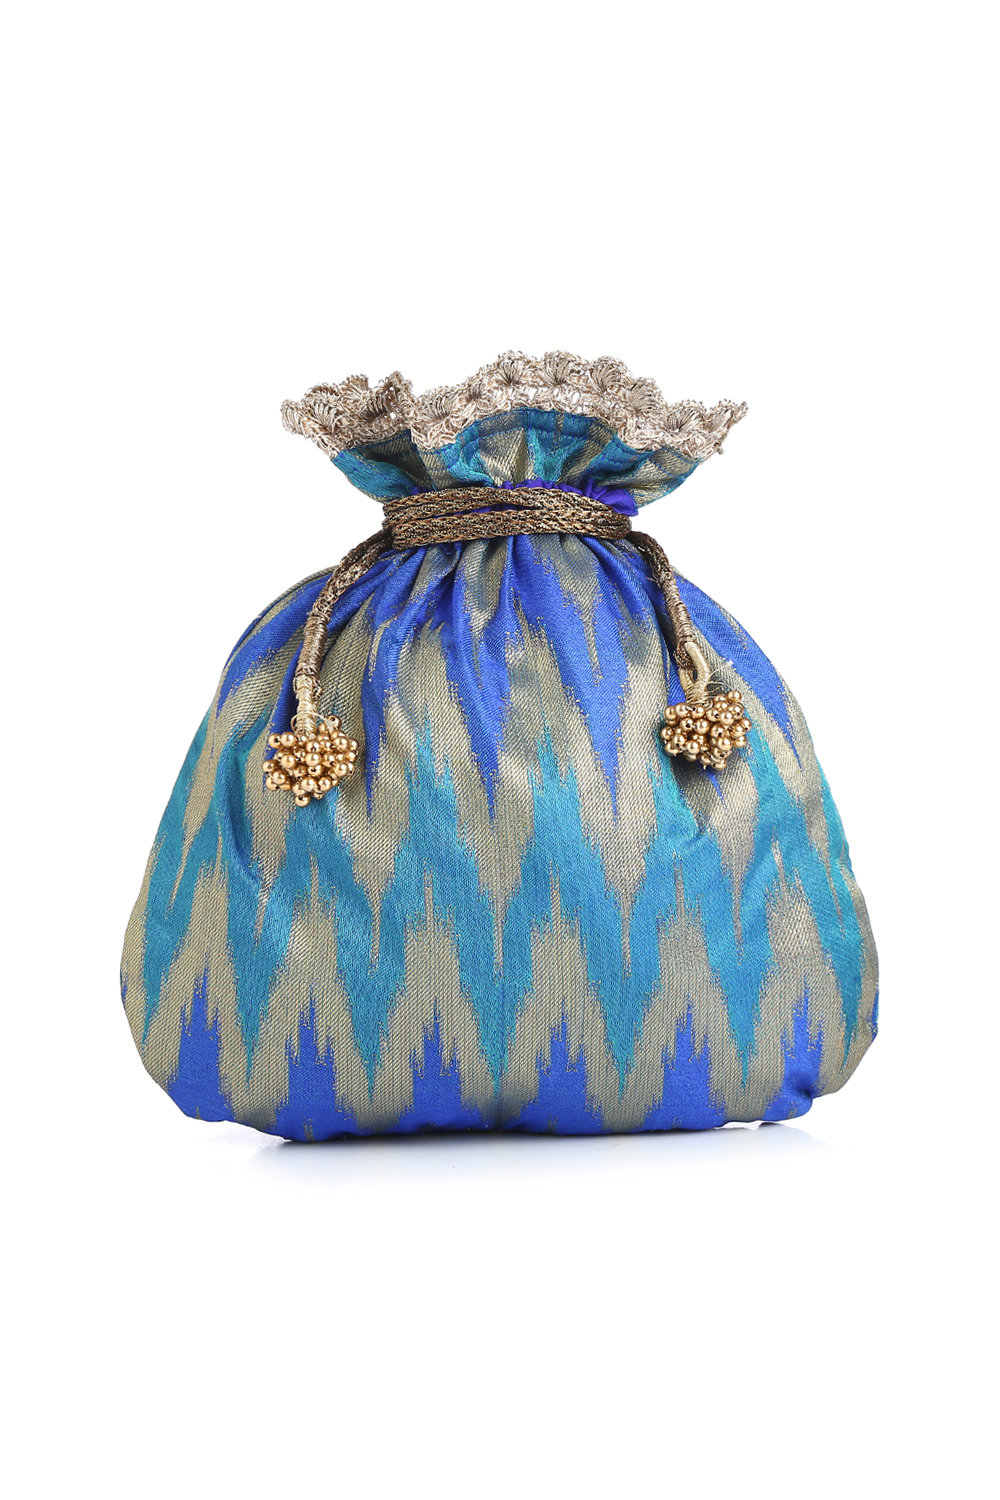 Blue brocade potli bag designed by Praccessorii at AASHNI+CO.